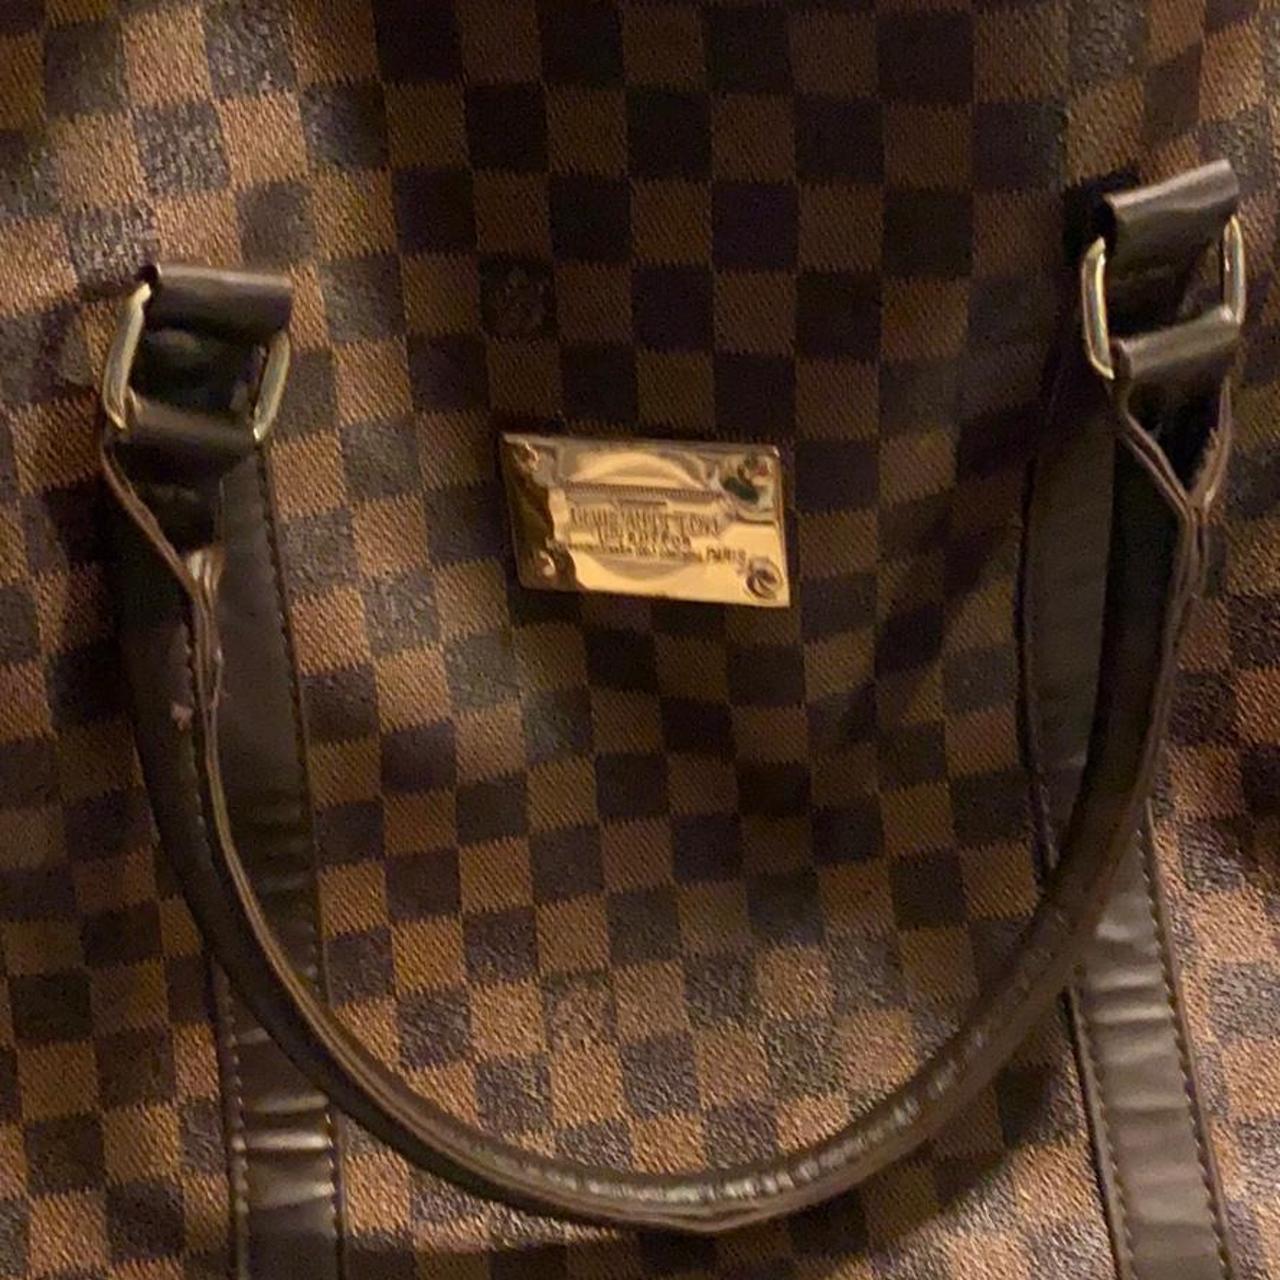 Vintage Louis Vuitton duffle bag 60cm in great - Depop